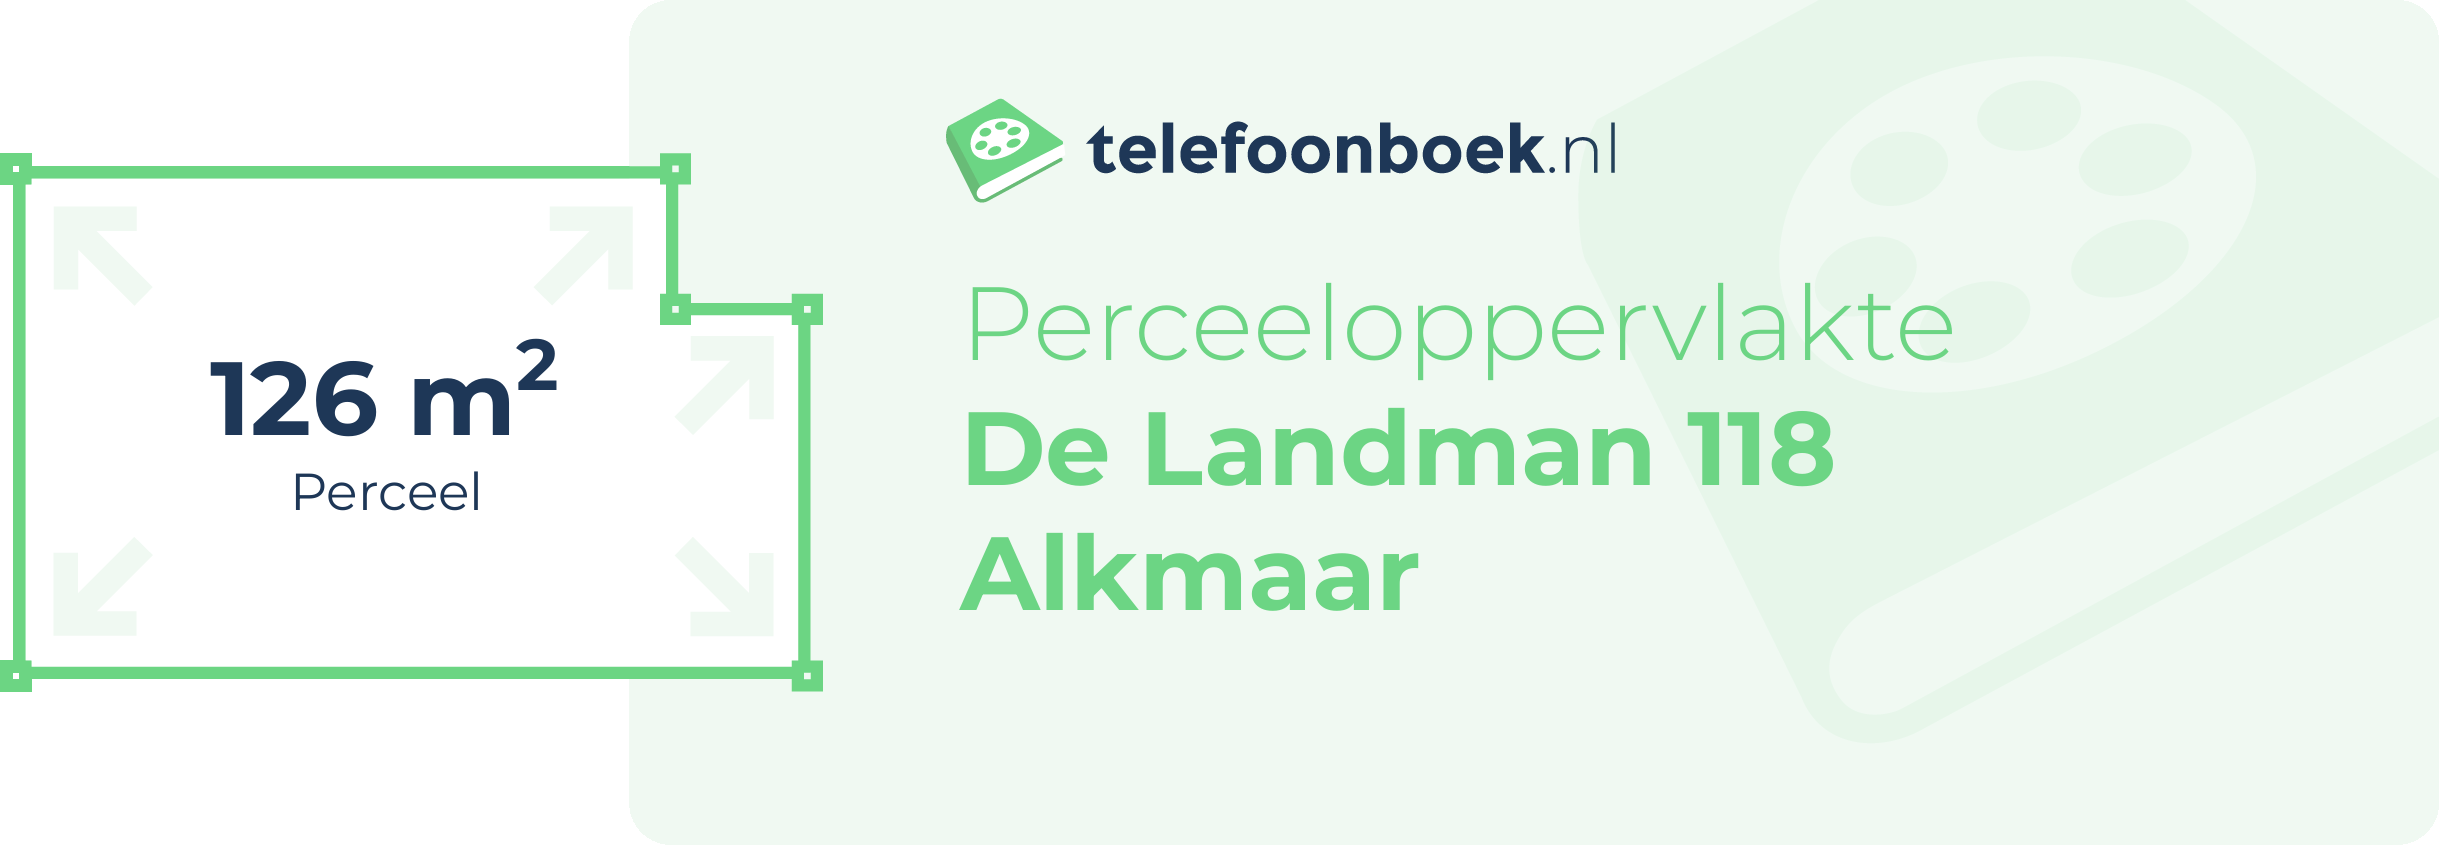 Perceeloppervlakte De Landman 118 Alkmaar